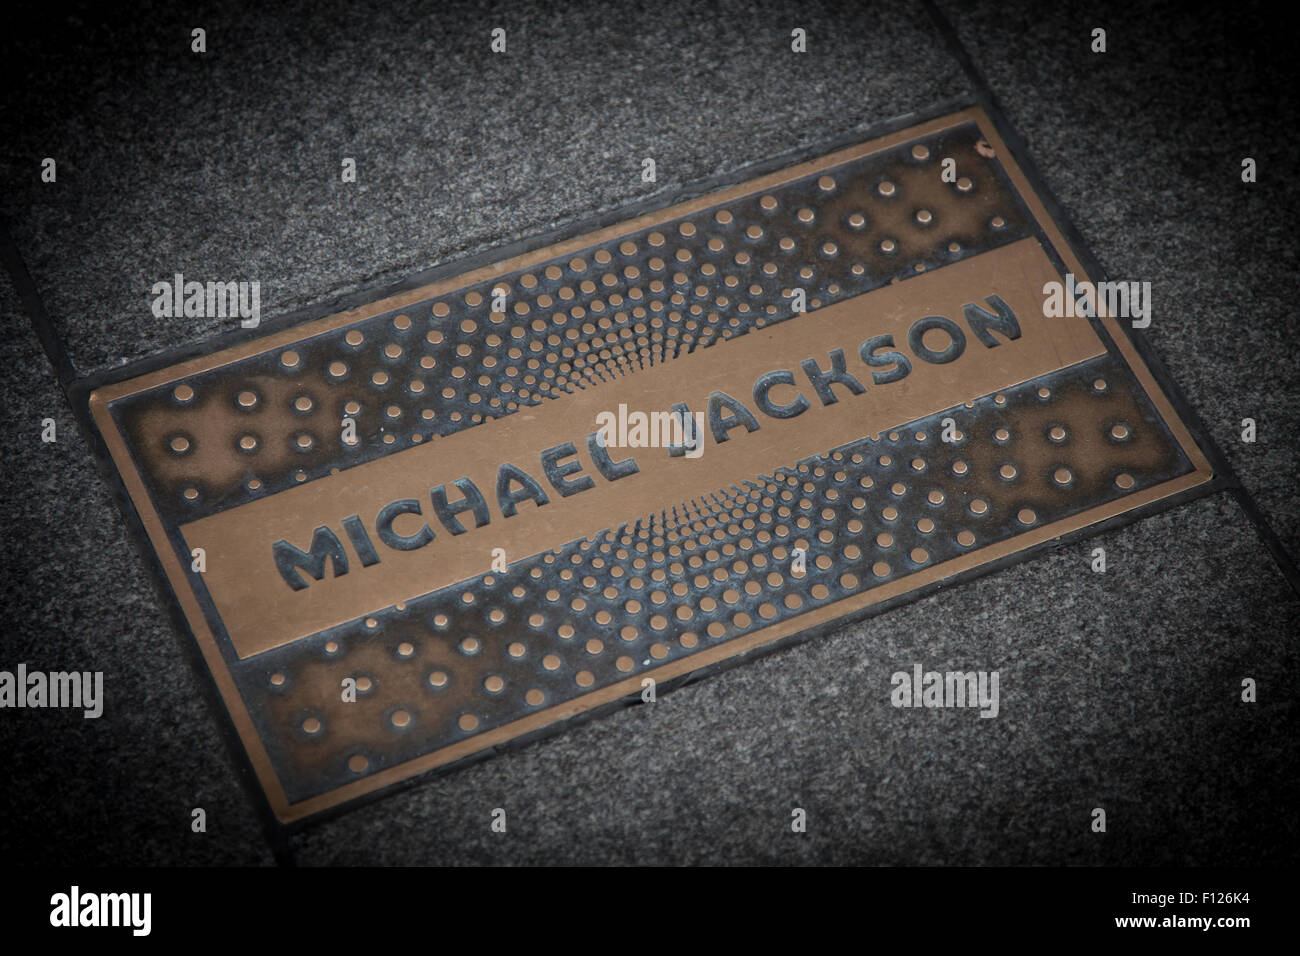 Michael Jackson-Pflaster-Platte vor berühmten Apollo Theater in Harlem New York City Stockfoto